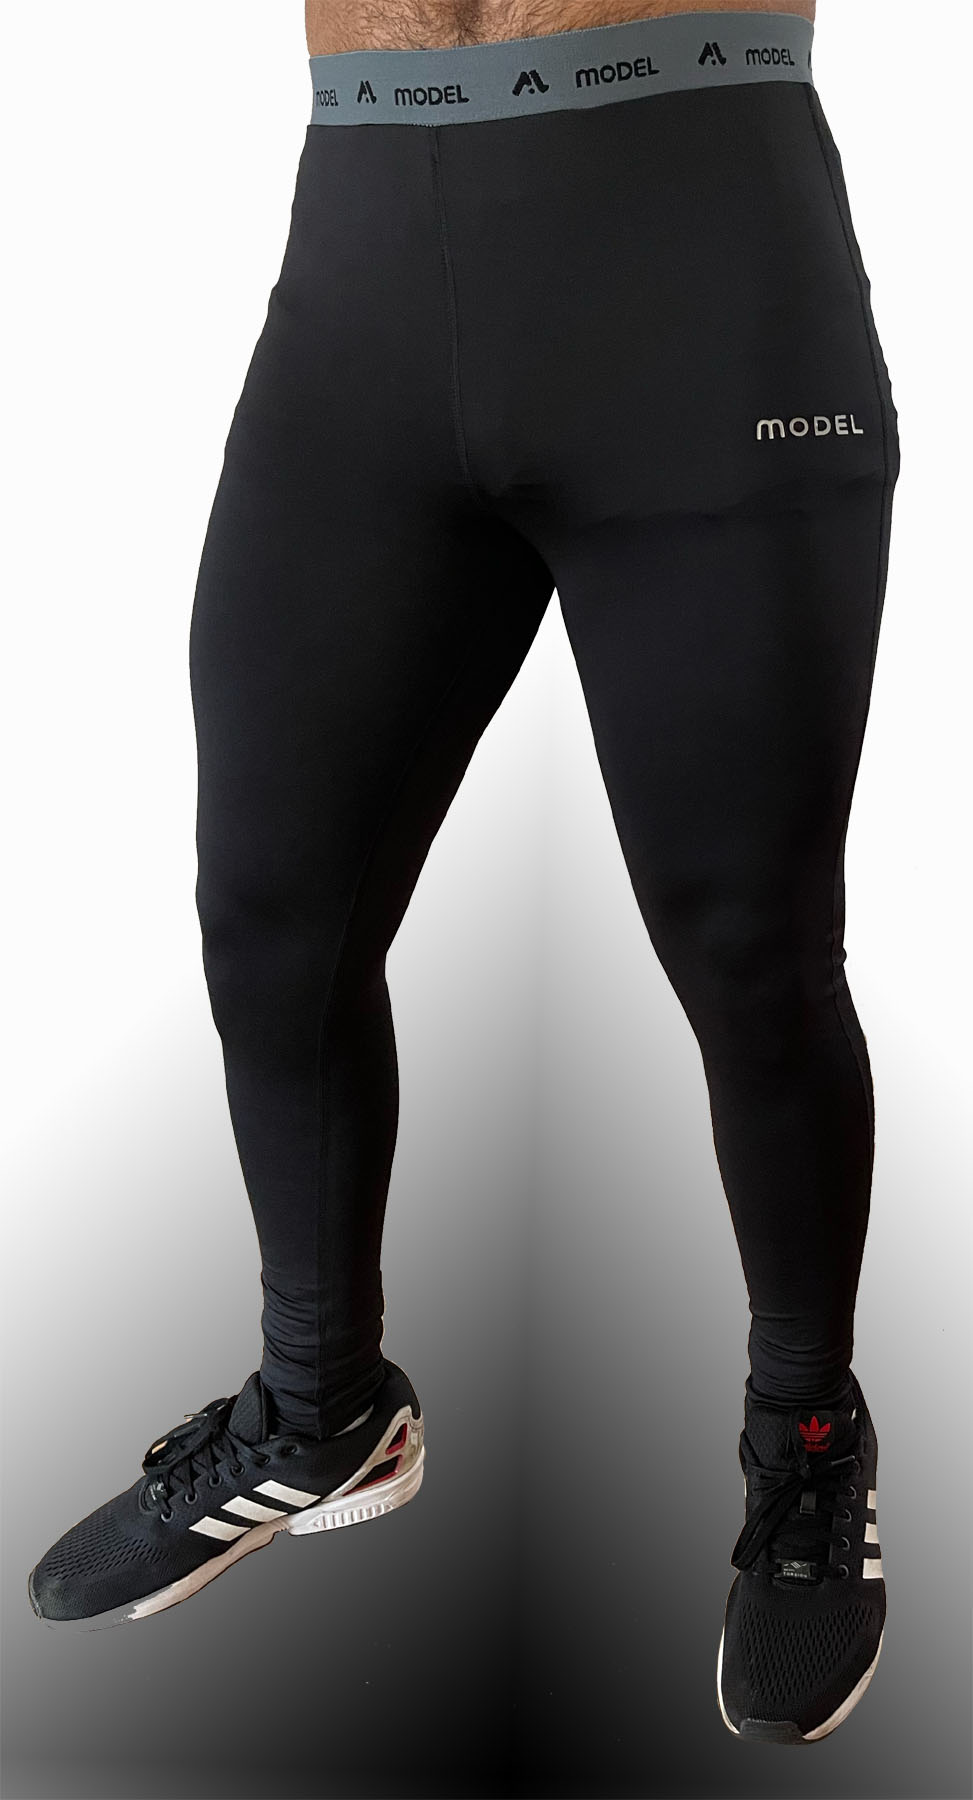 Men’s leggings & tights running training best fit L7 – Model Sports Works